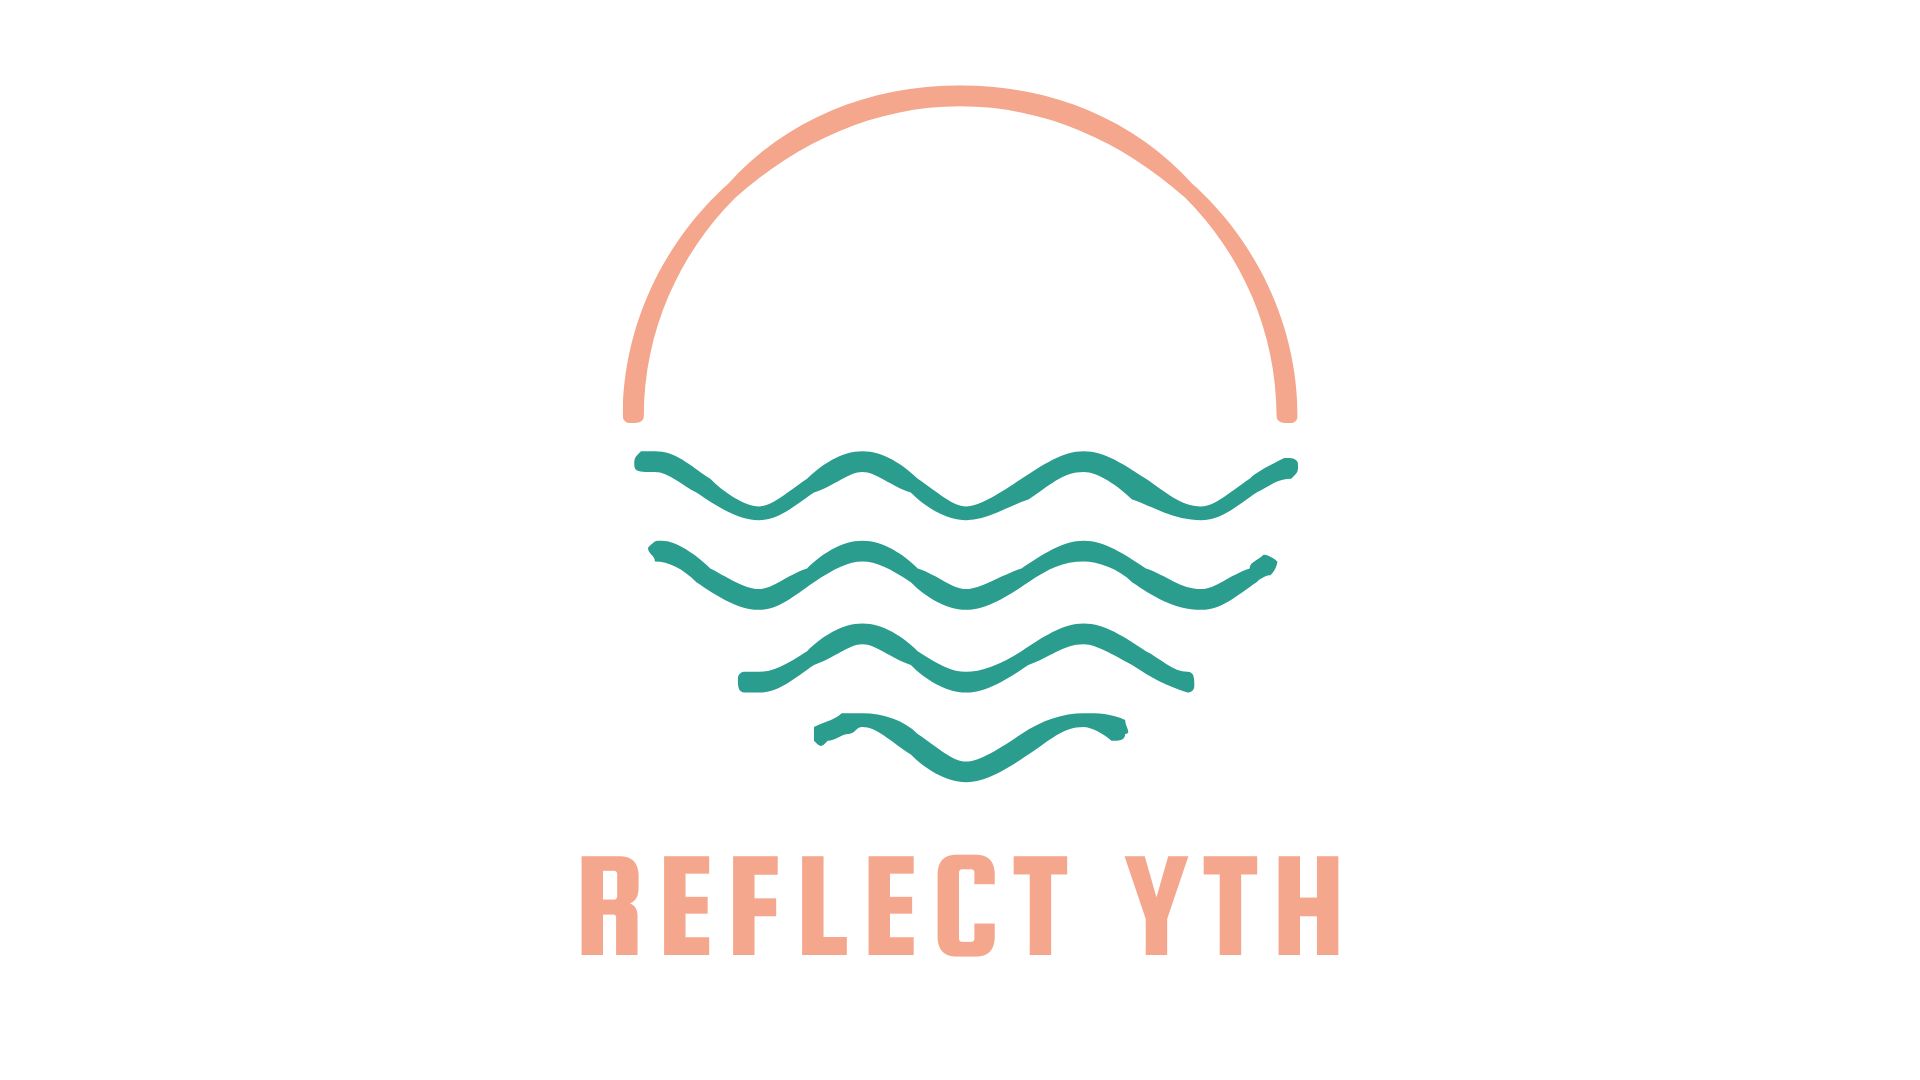 REFLECT YTH